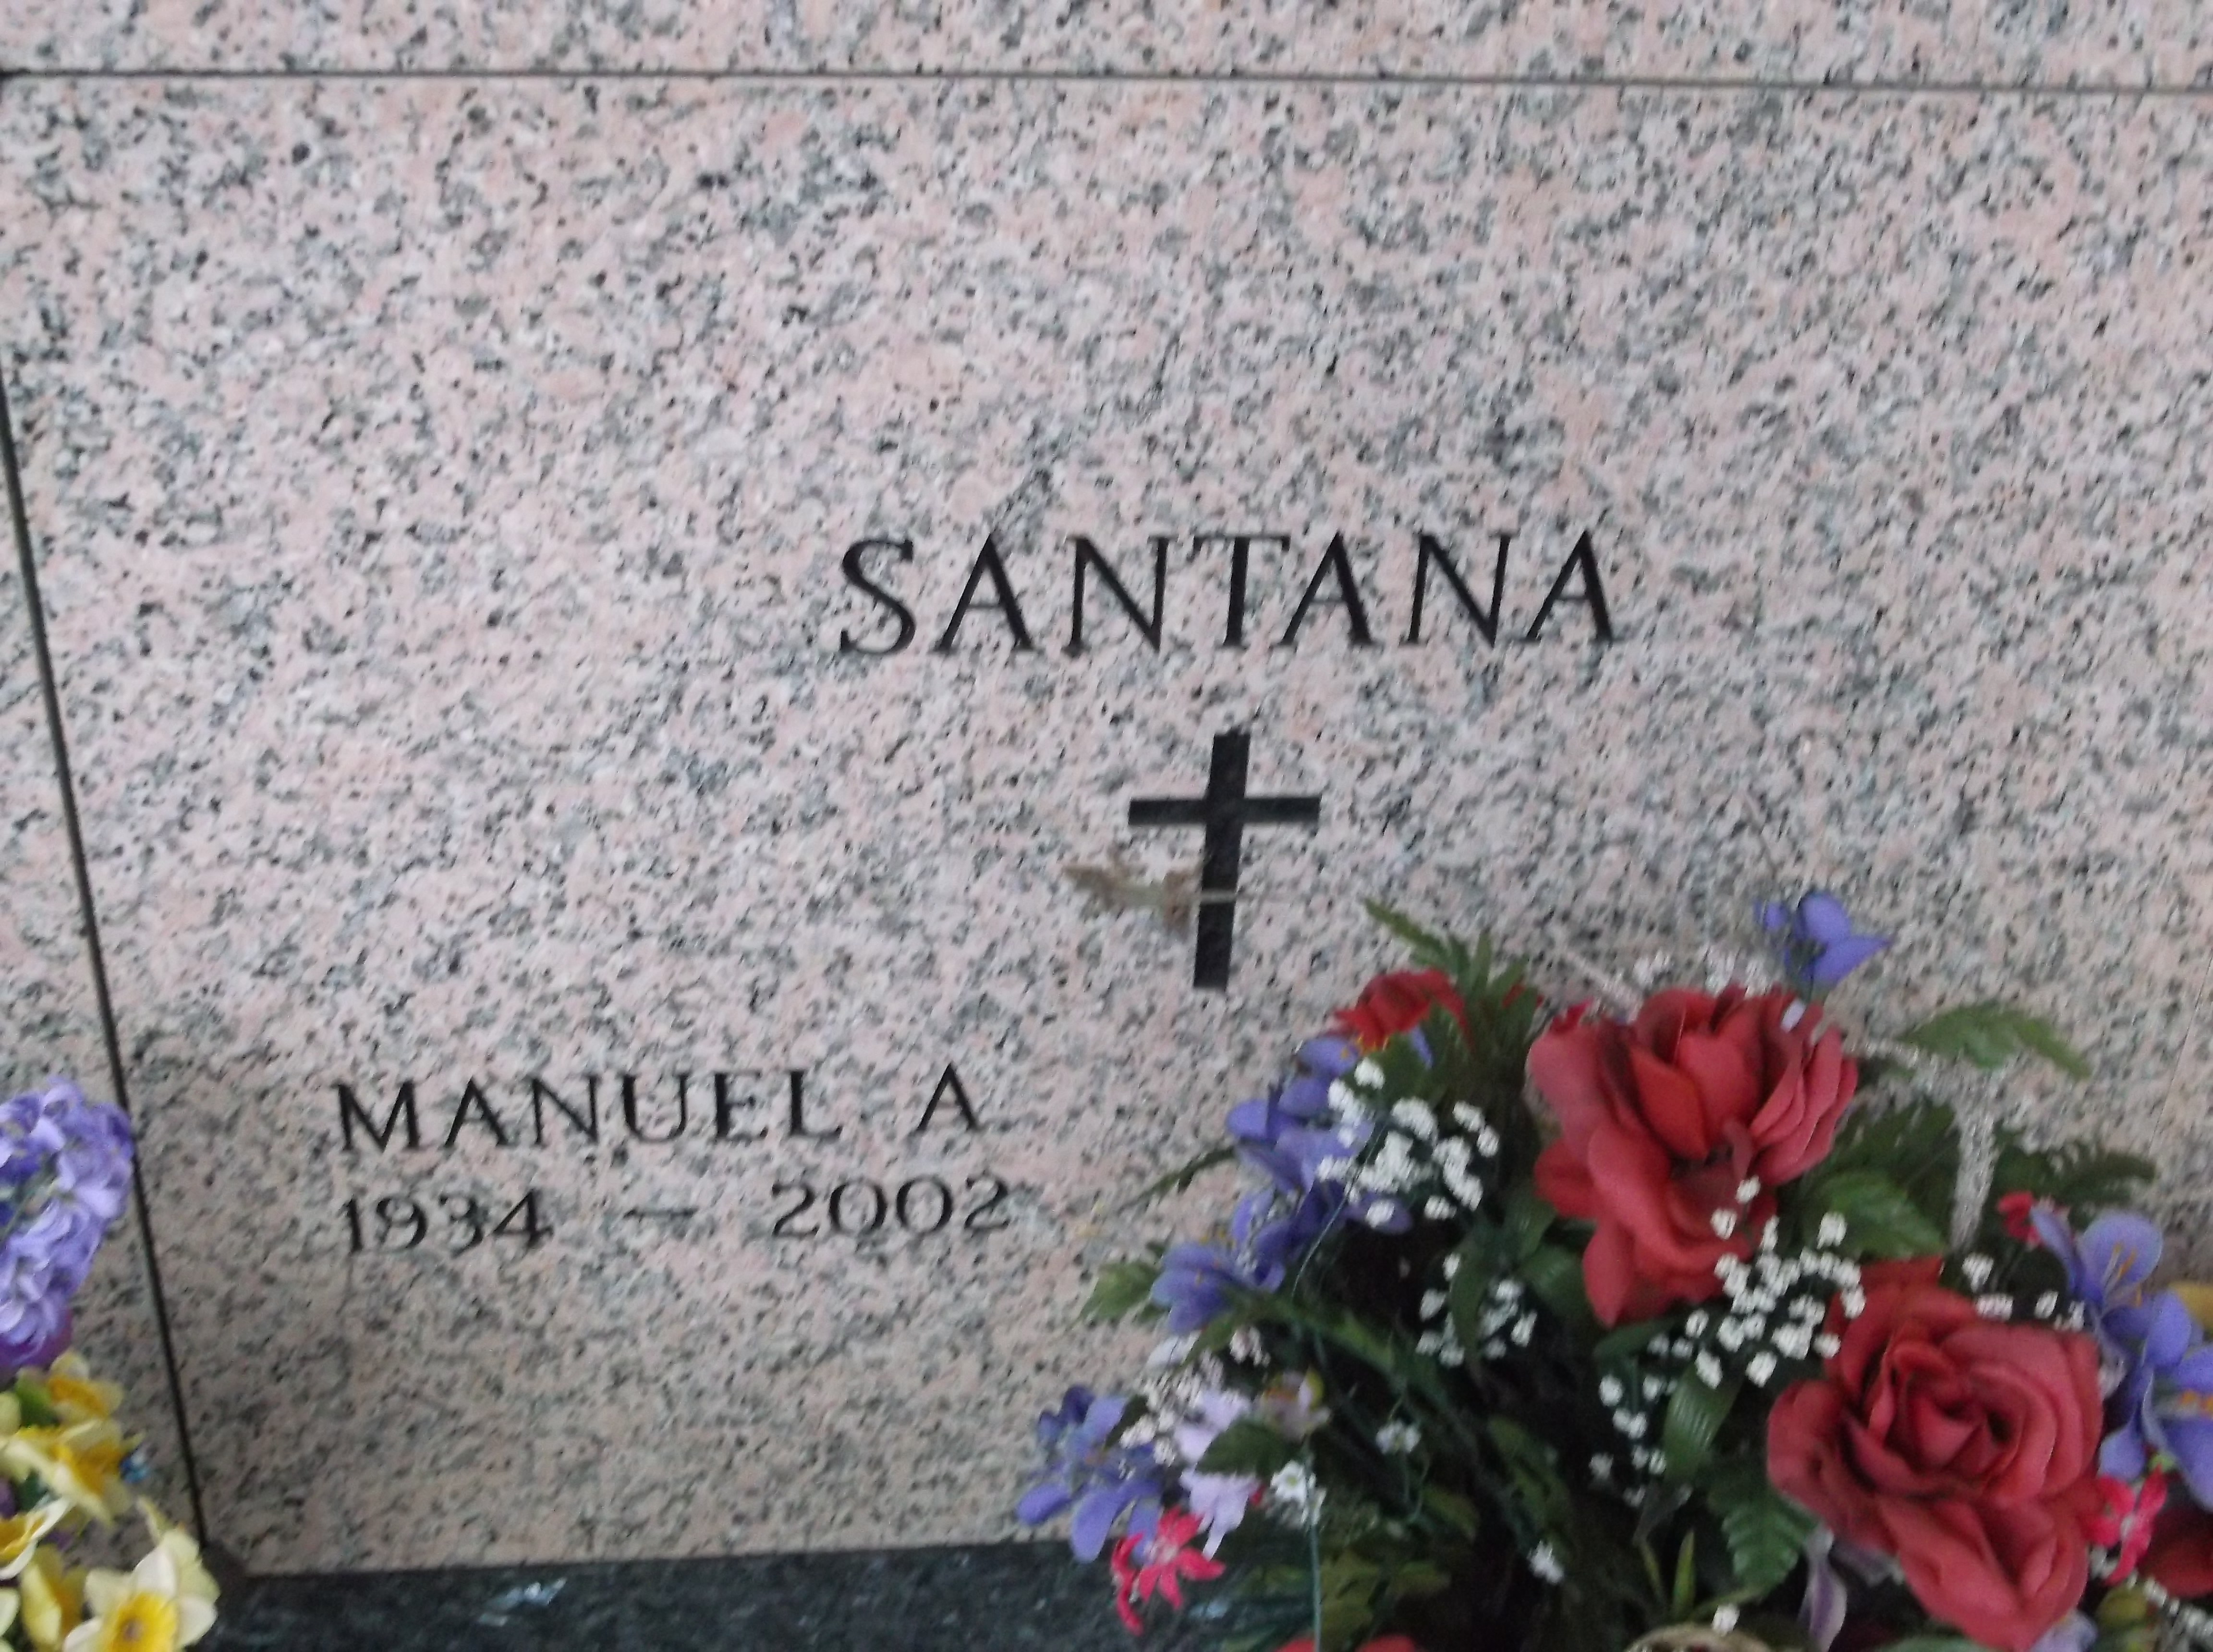 Manuel A Santana